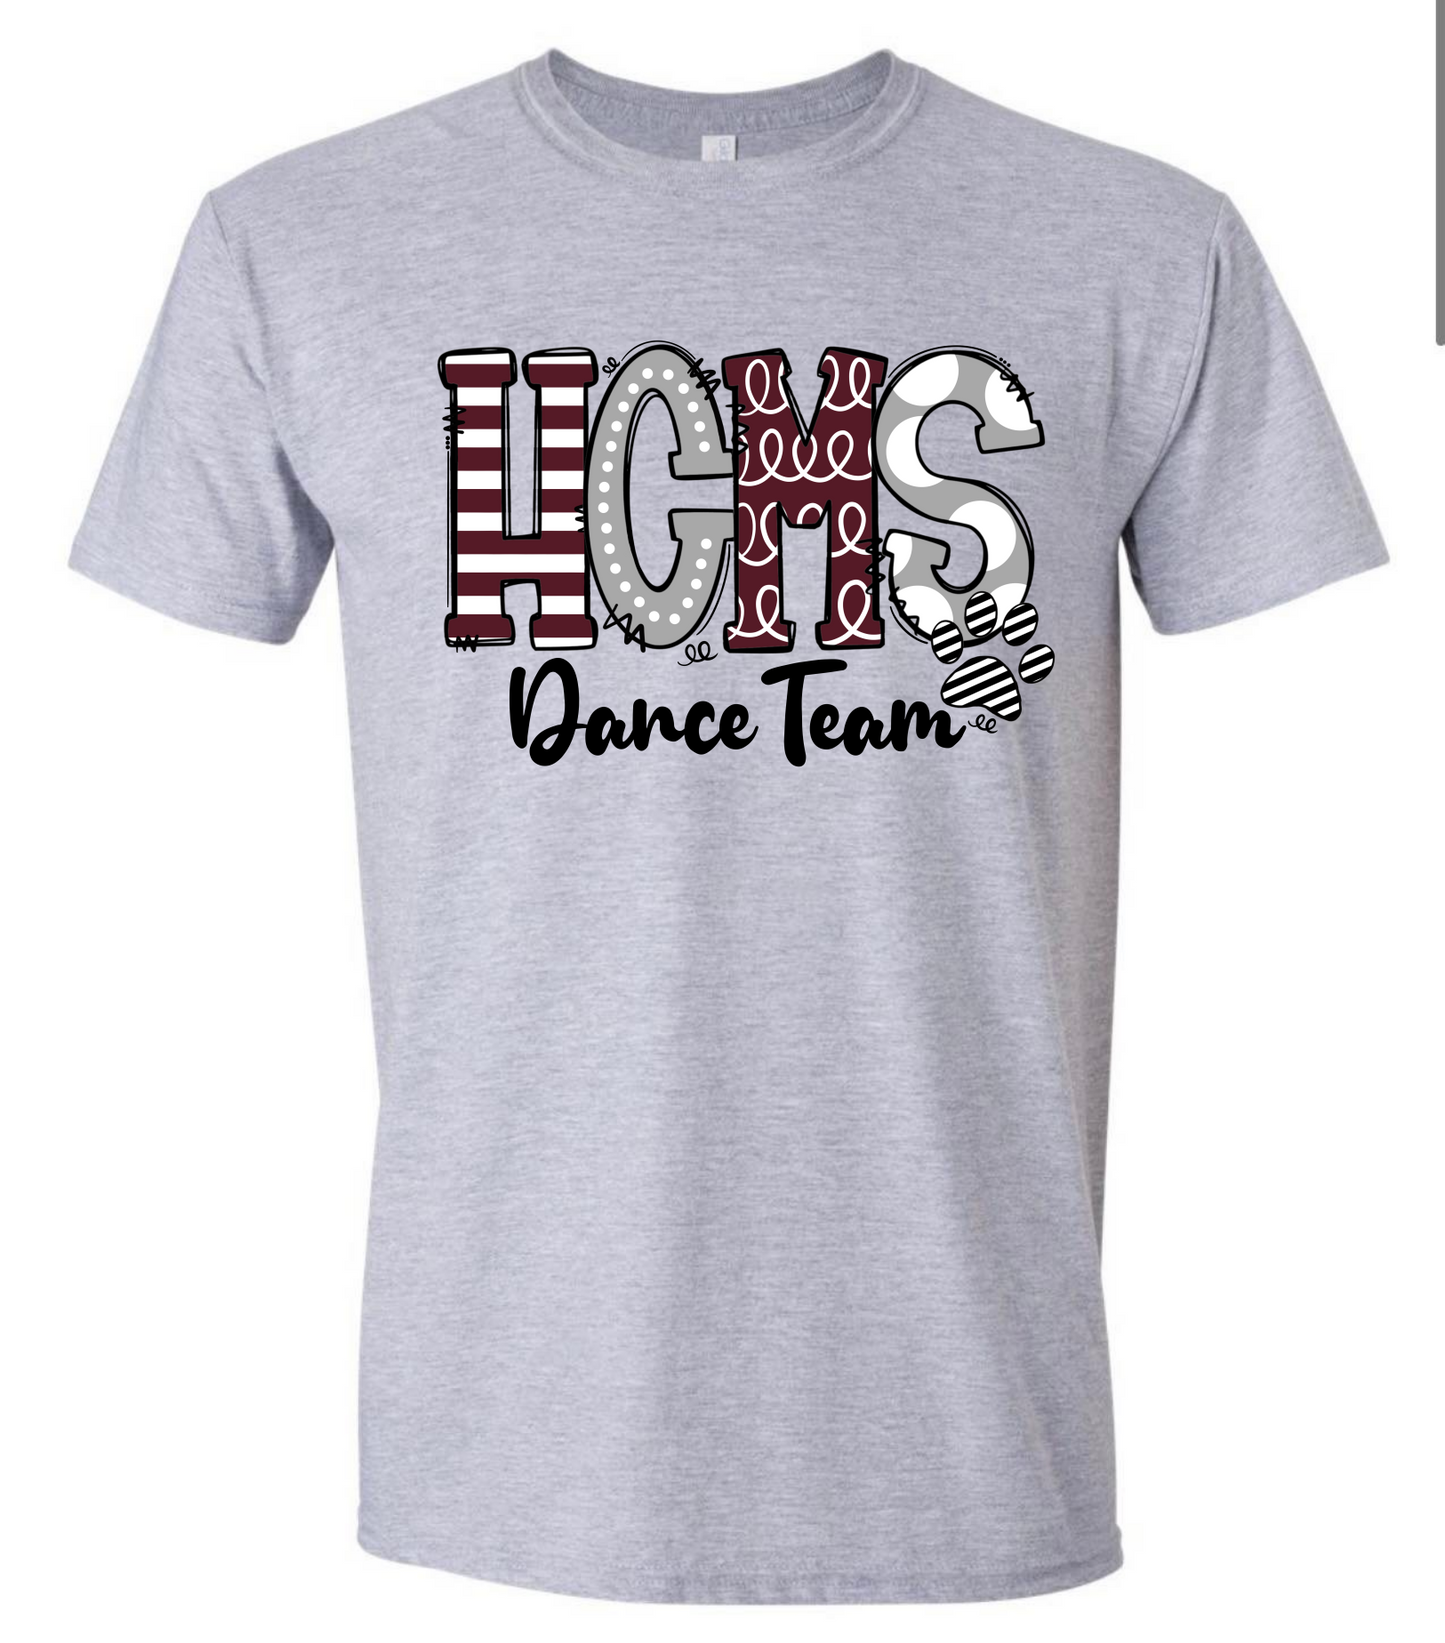 HCMS DANCE TEAM Tshirt